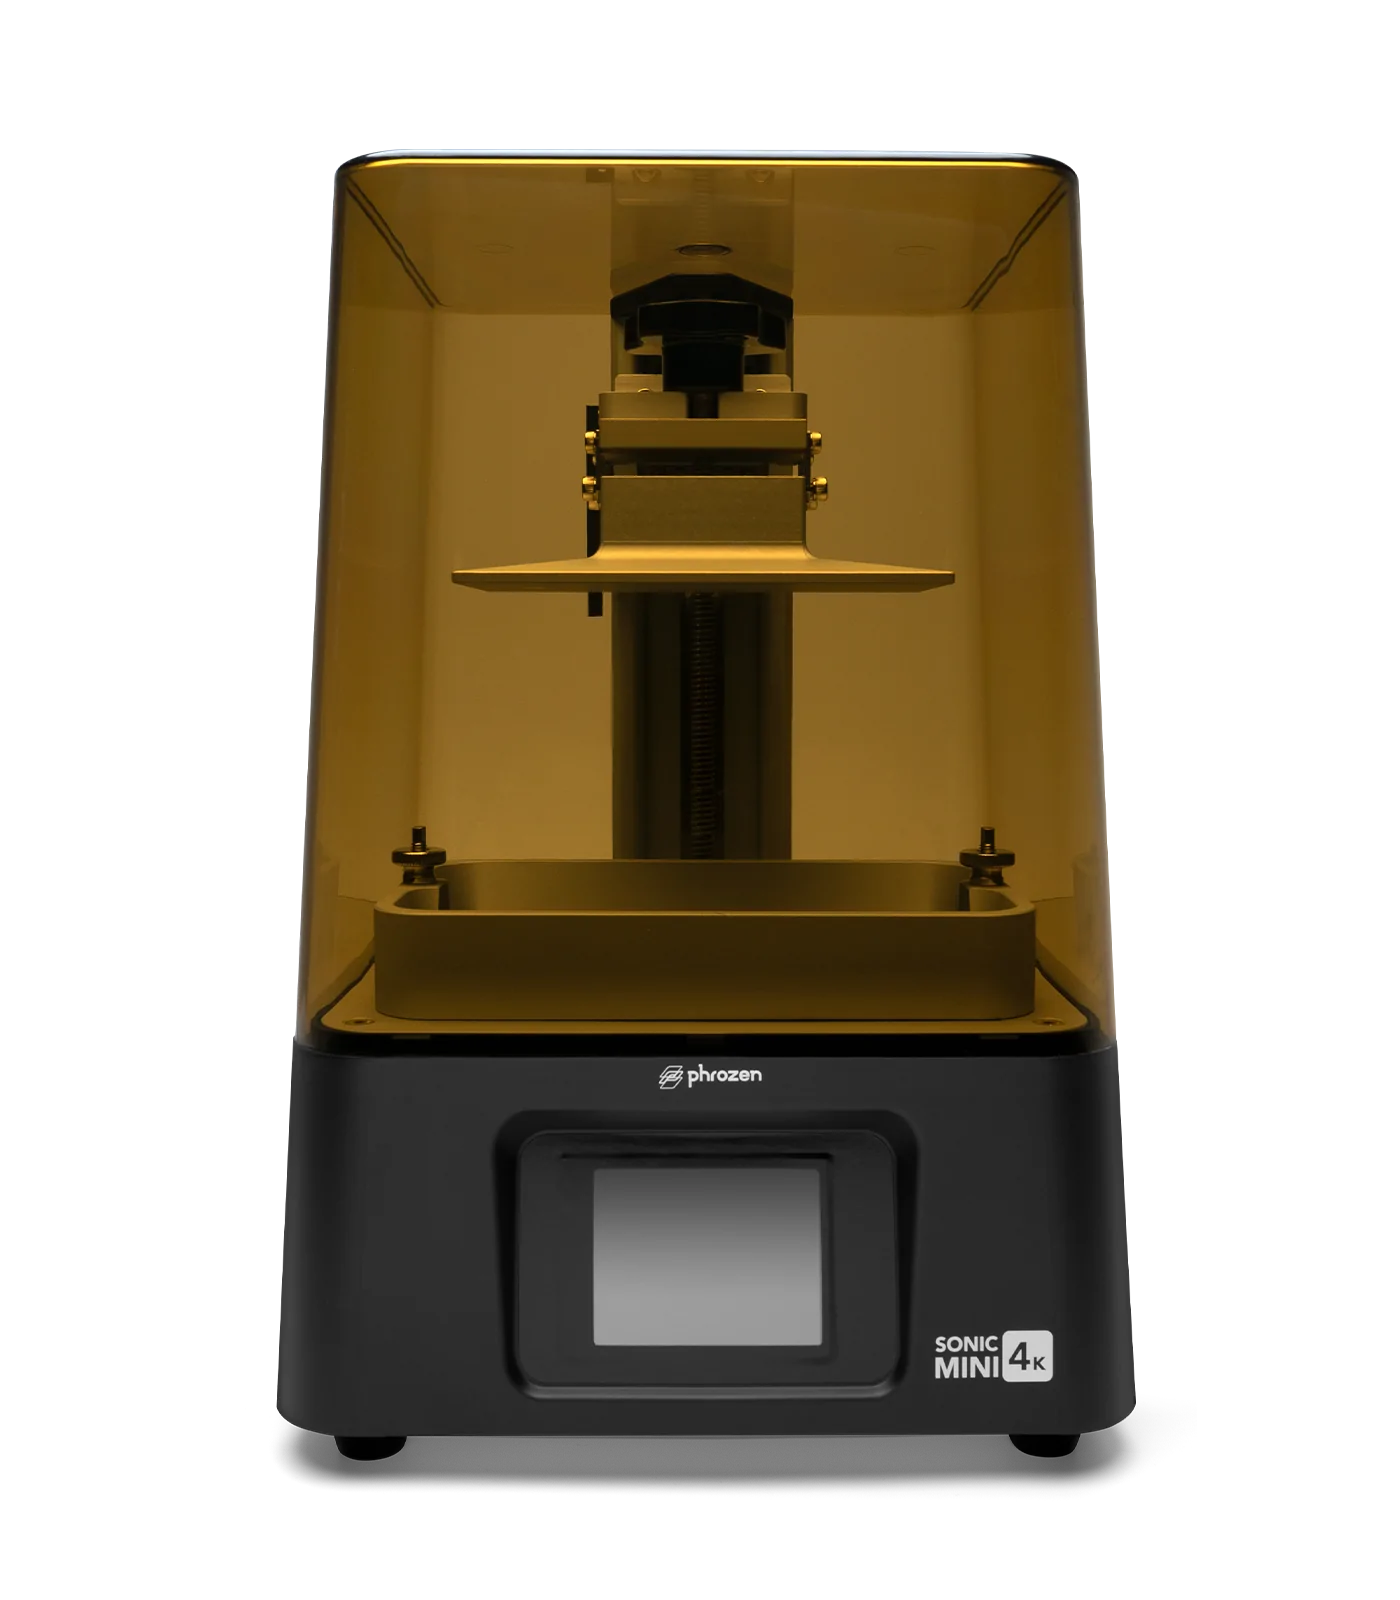 3D Printers - Phrozen Sonic Mini 4K